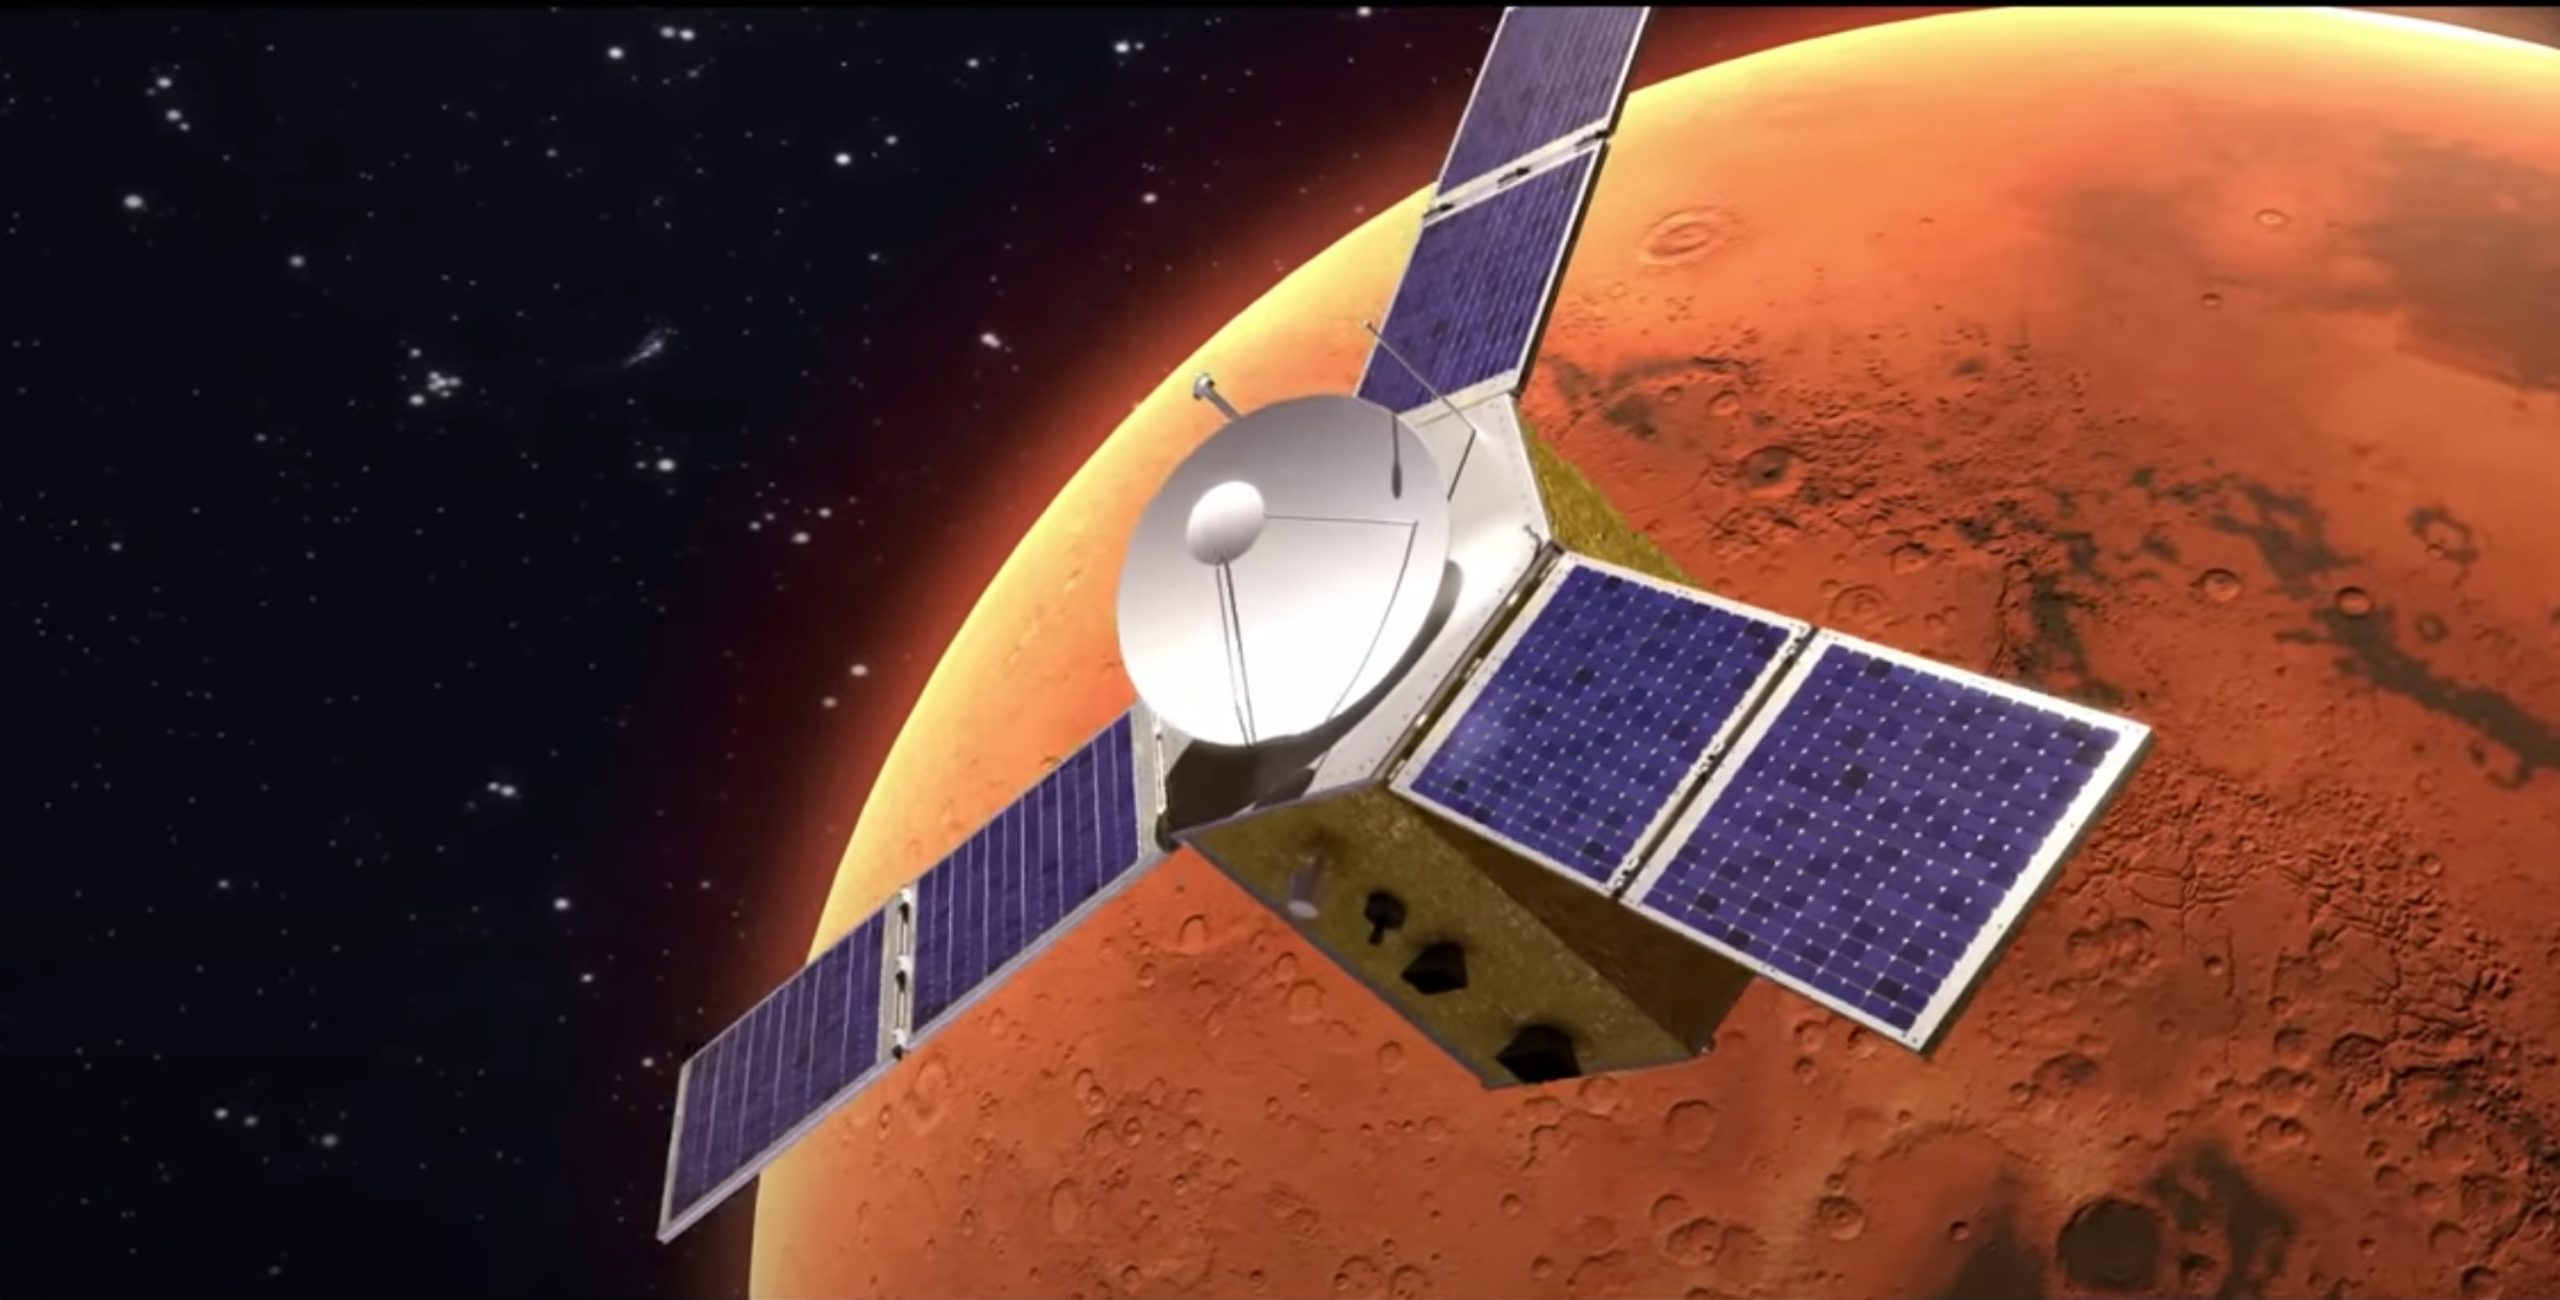 UAE spacecraft enters Mars orbit